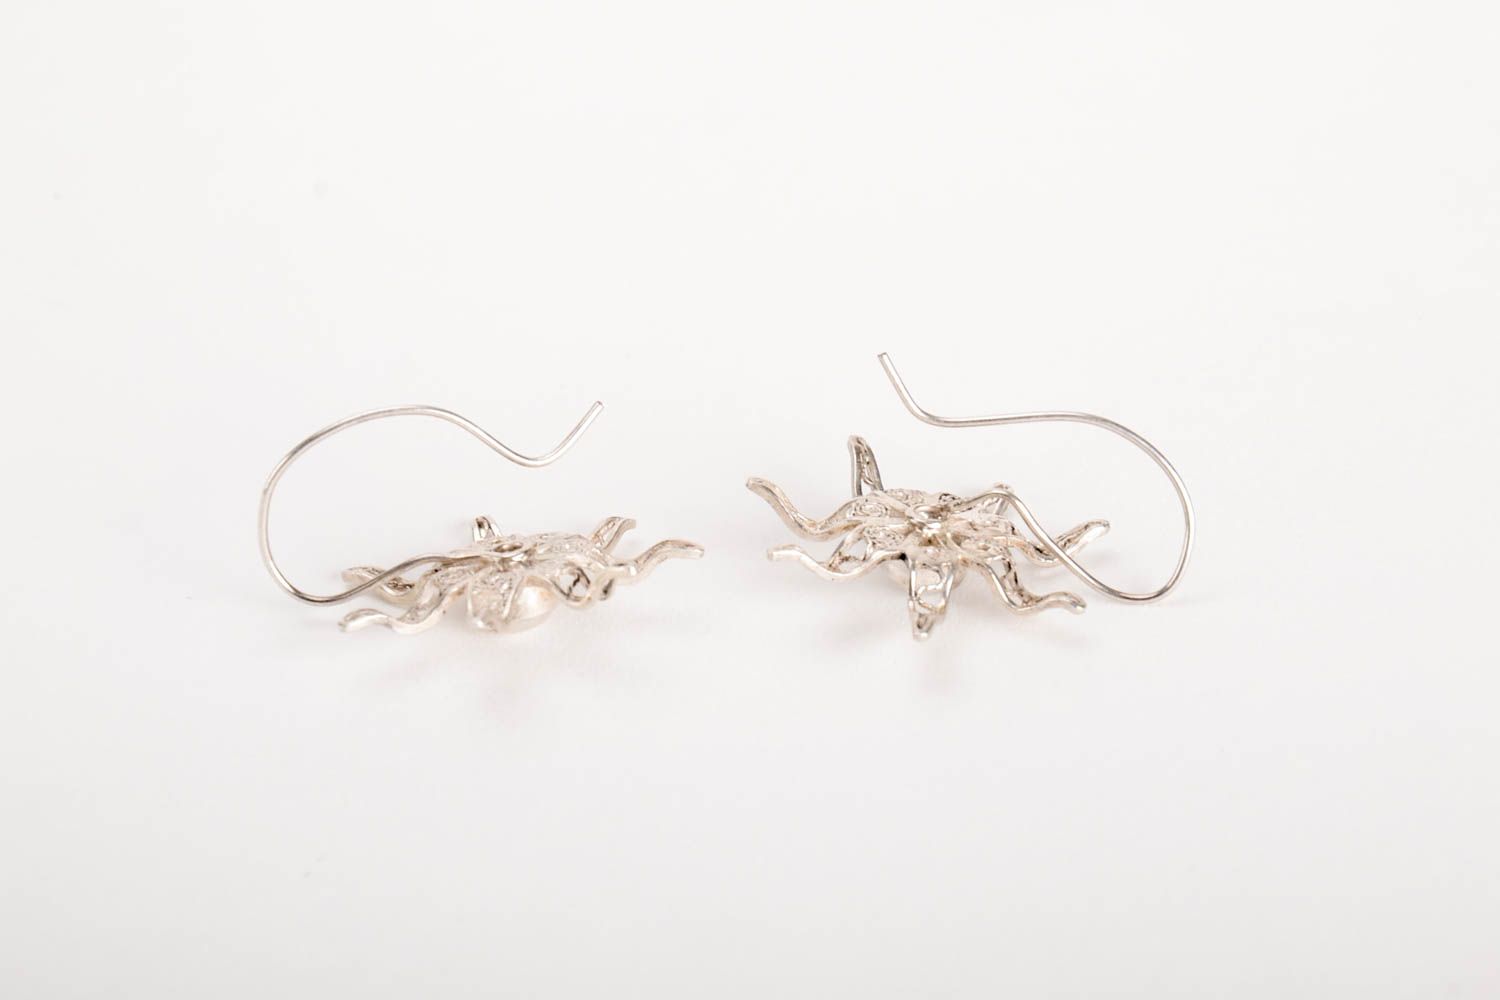 Handmade silver earrings designer earrings silver accessories for women photo 3